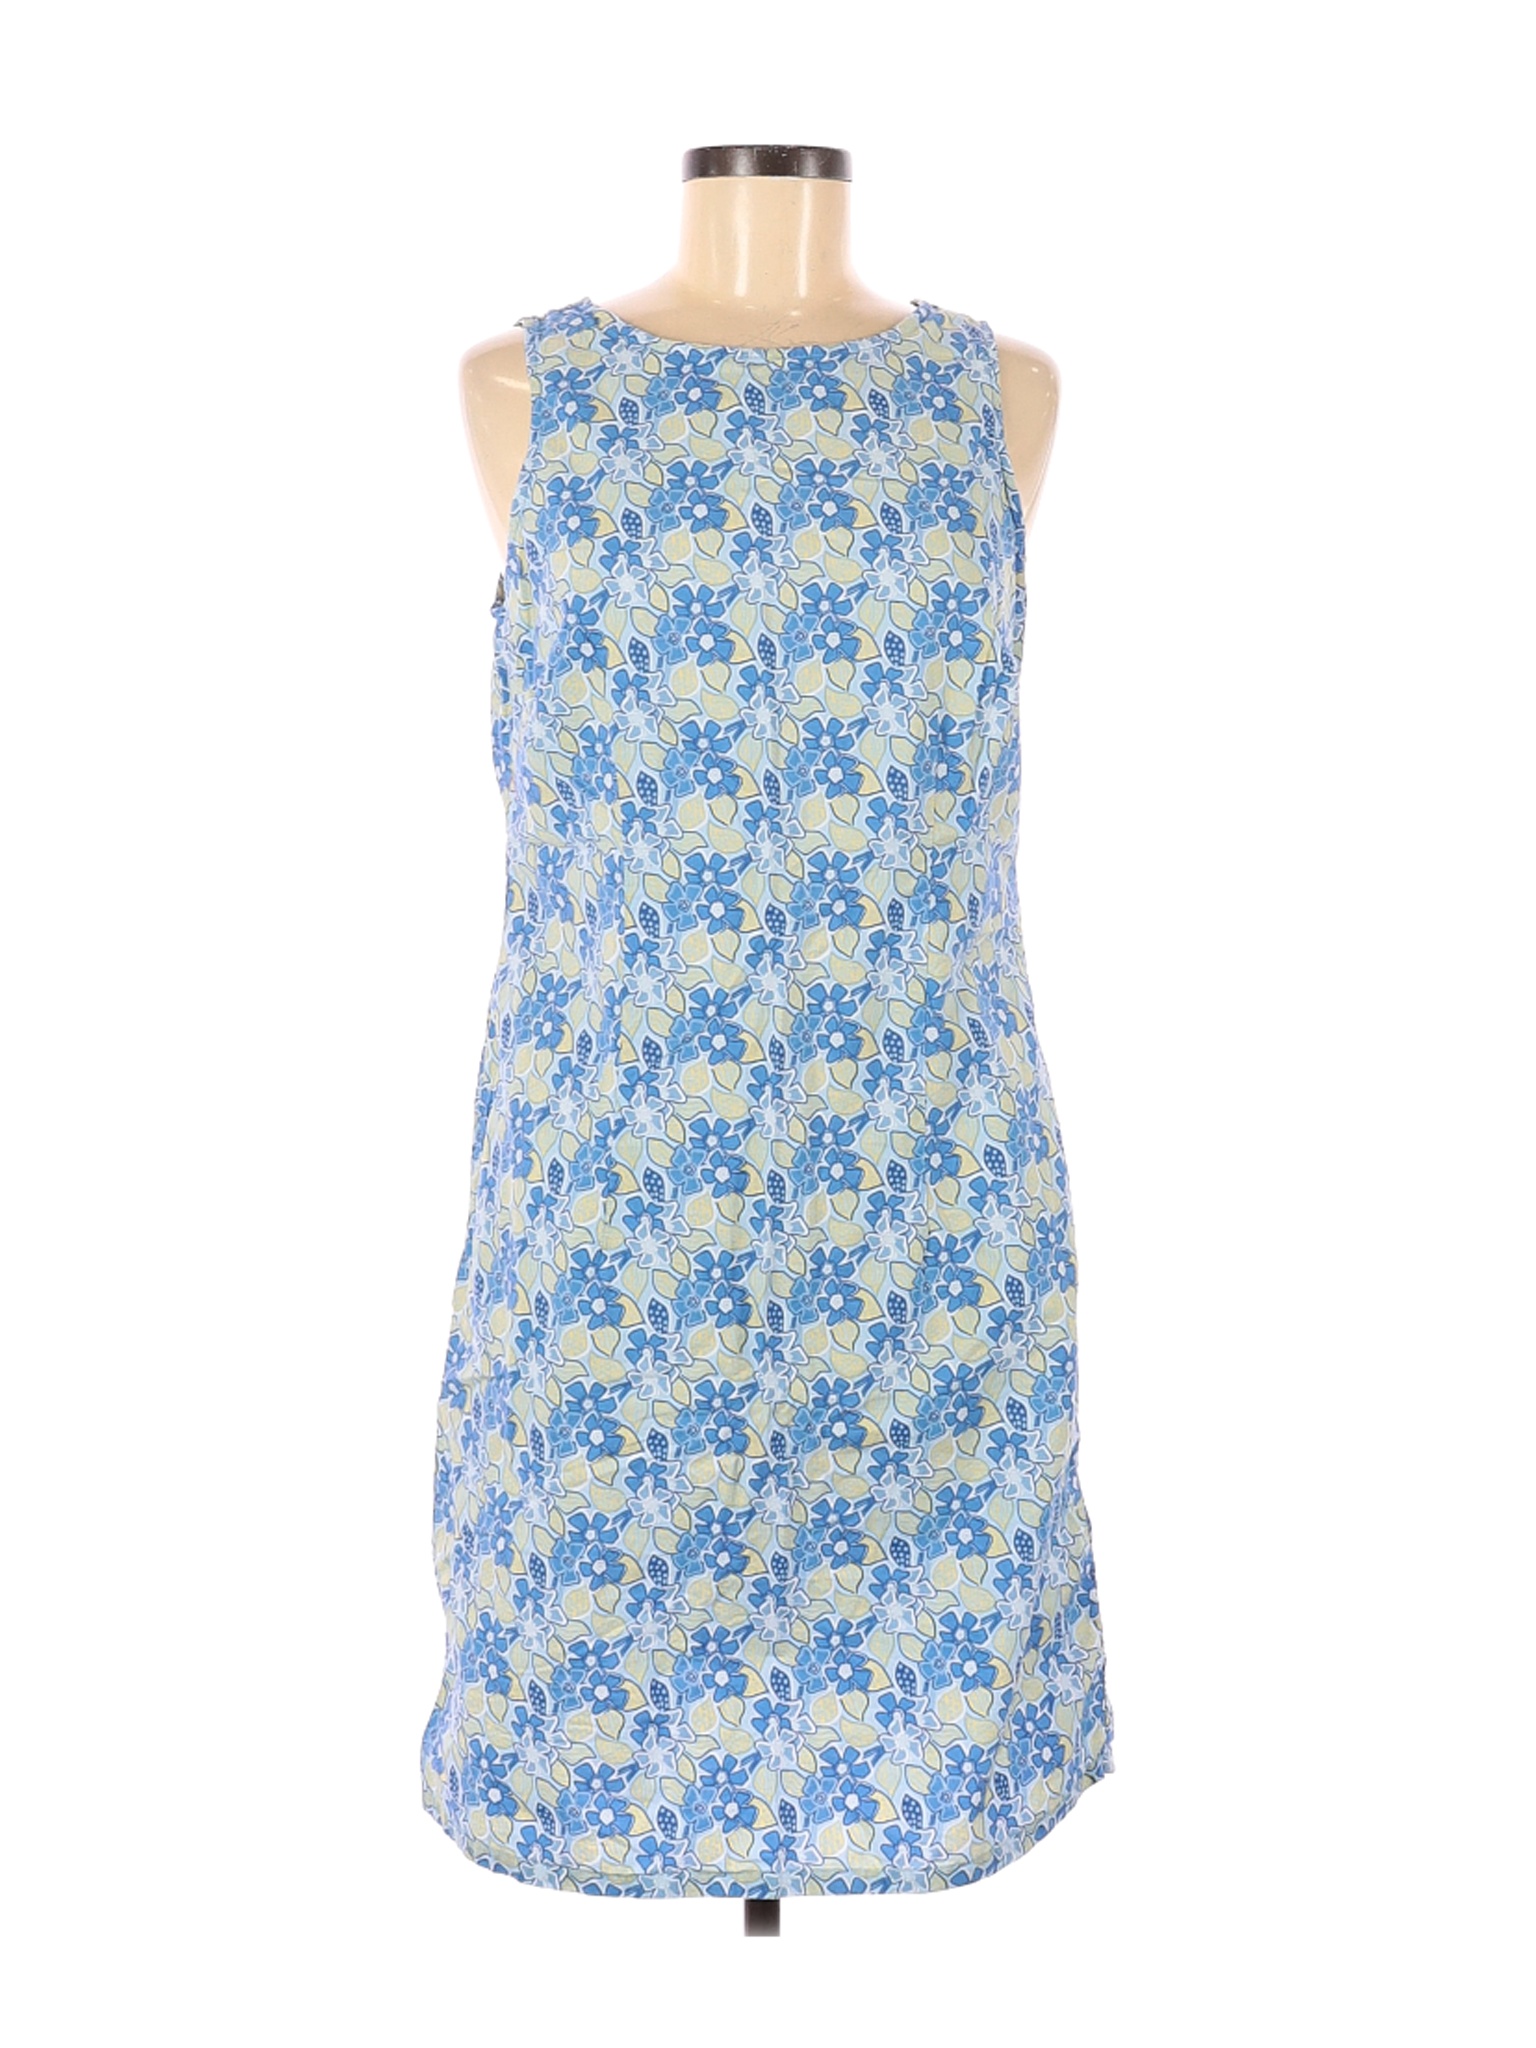 Expressions Women Blue Casual Dress M | eBay